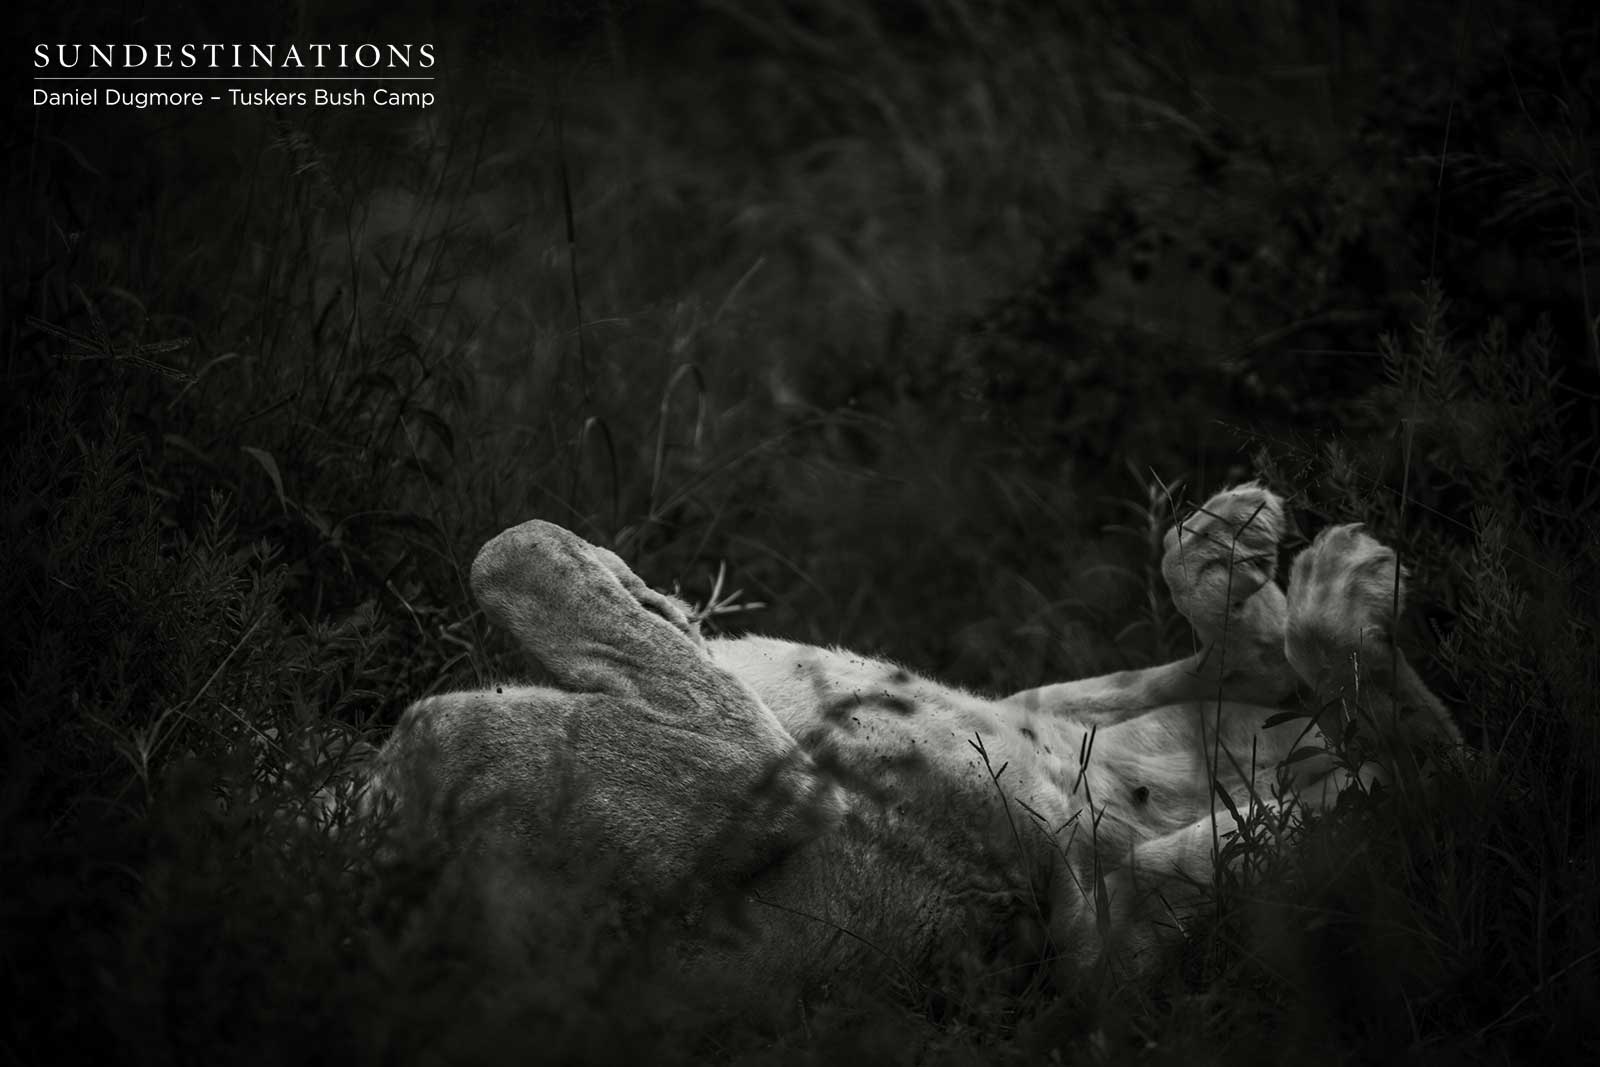 Lions at Tuskers Bush Camp